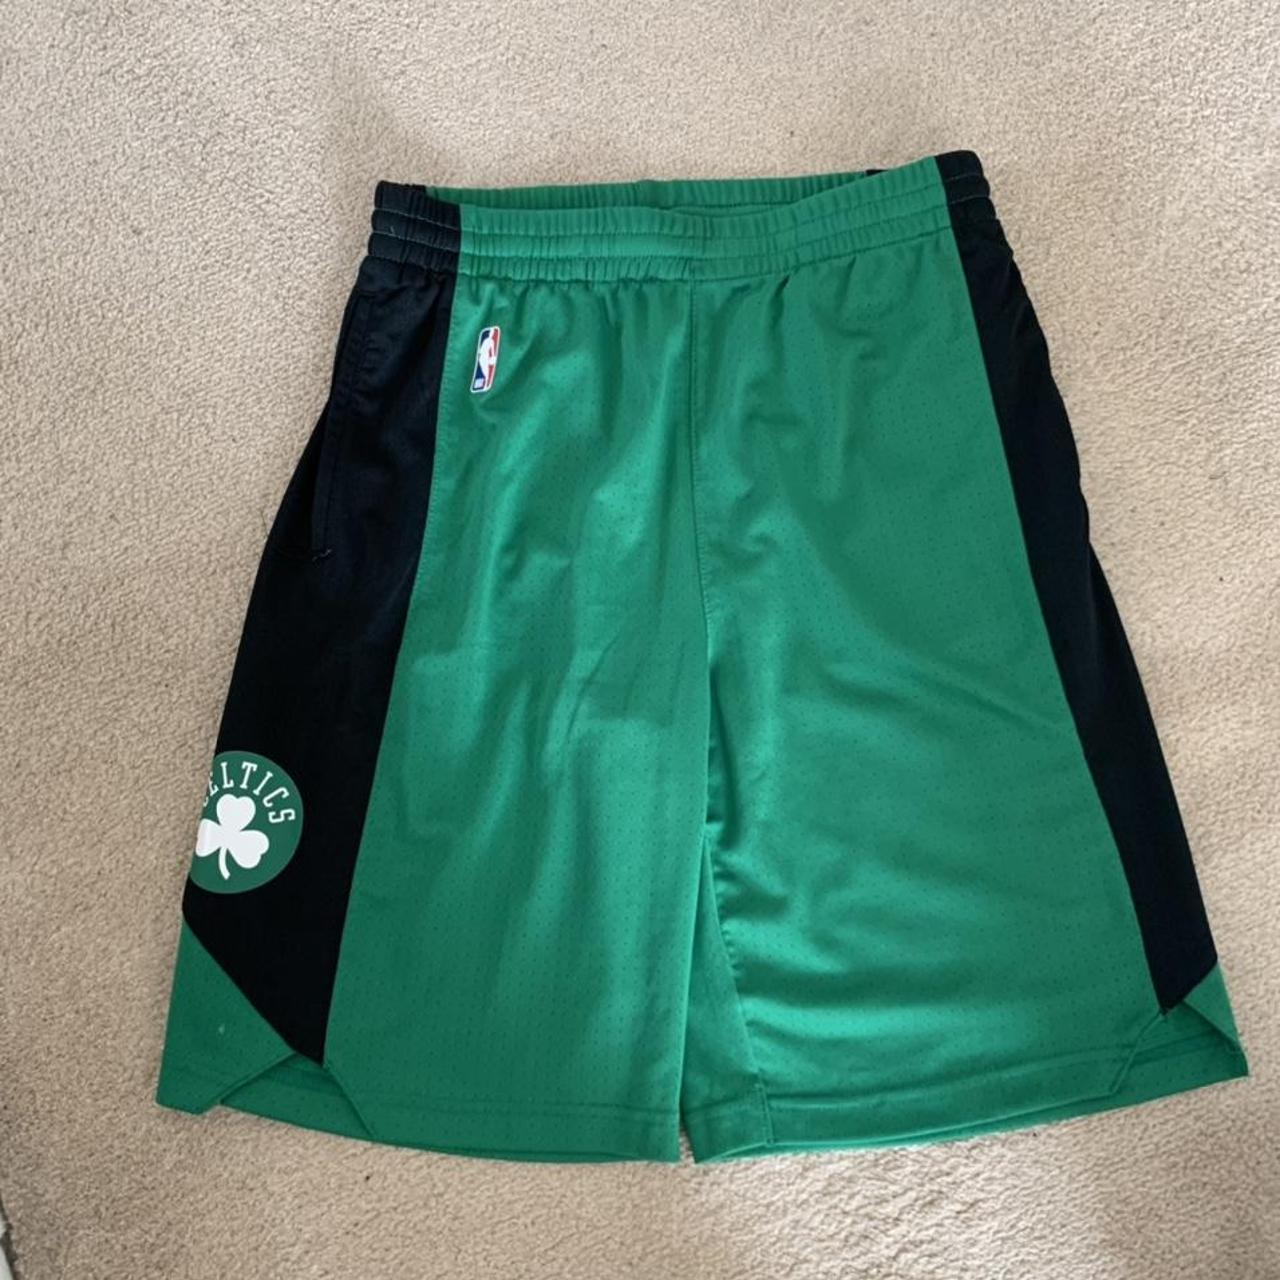 Boston Celtics Nike basketball shorts. Great... - Depop